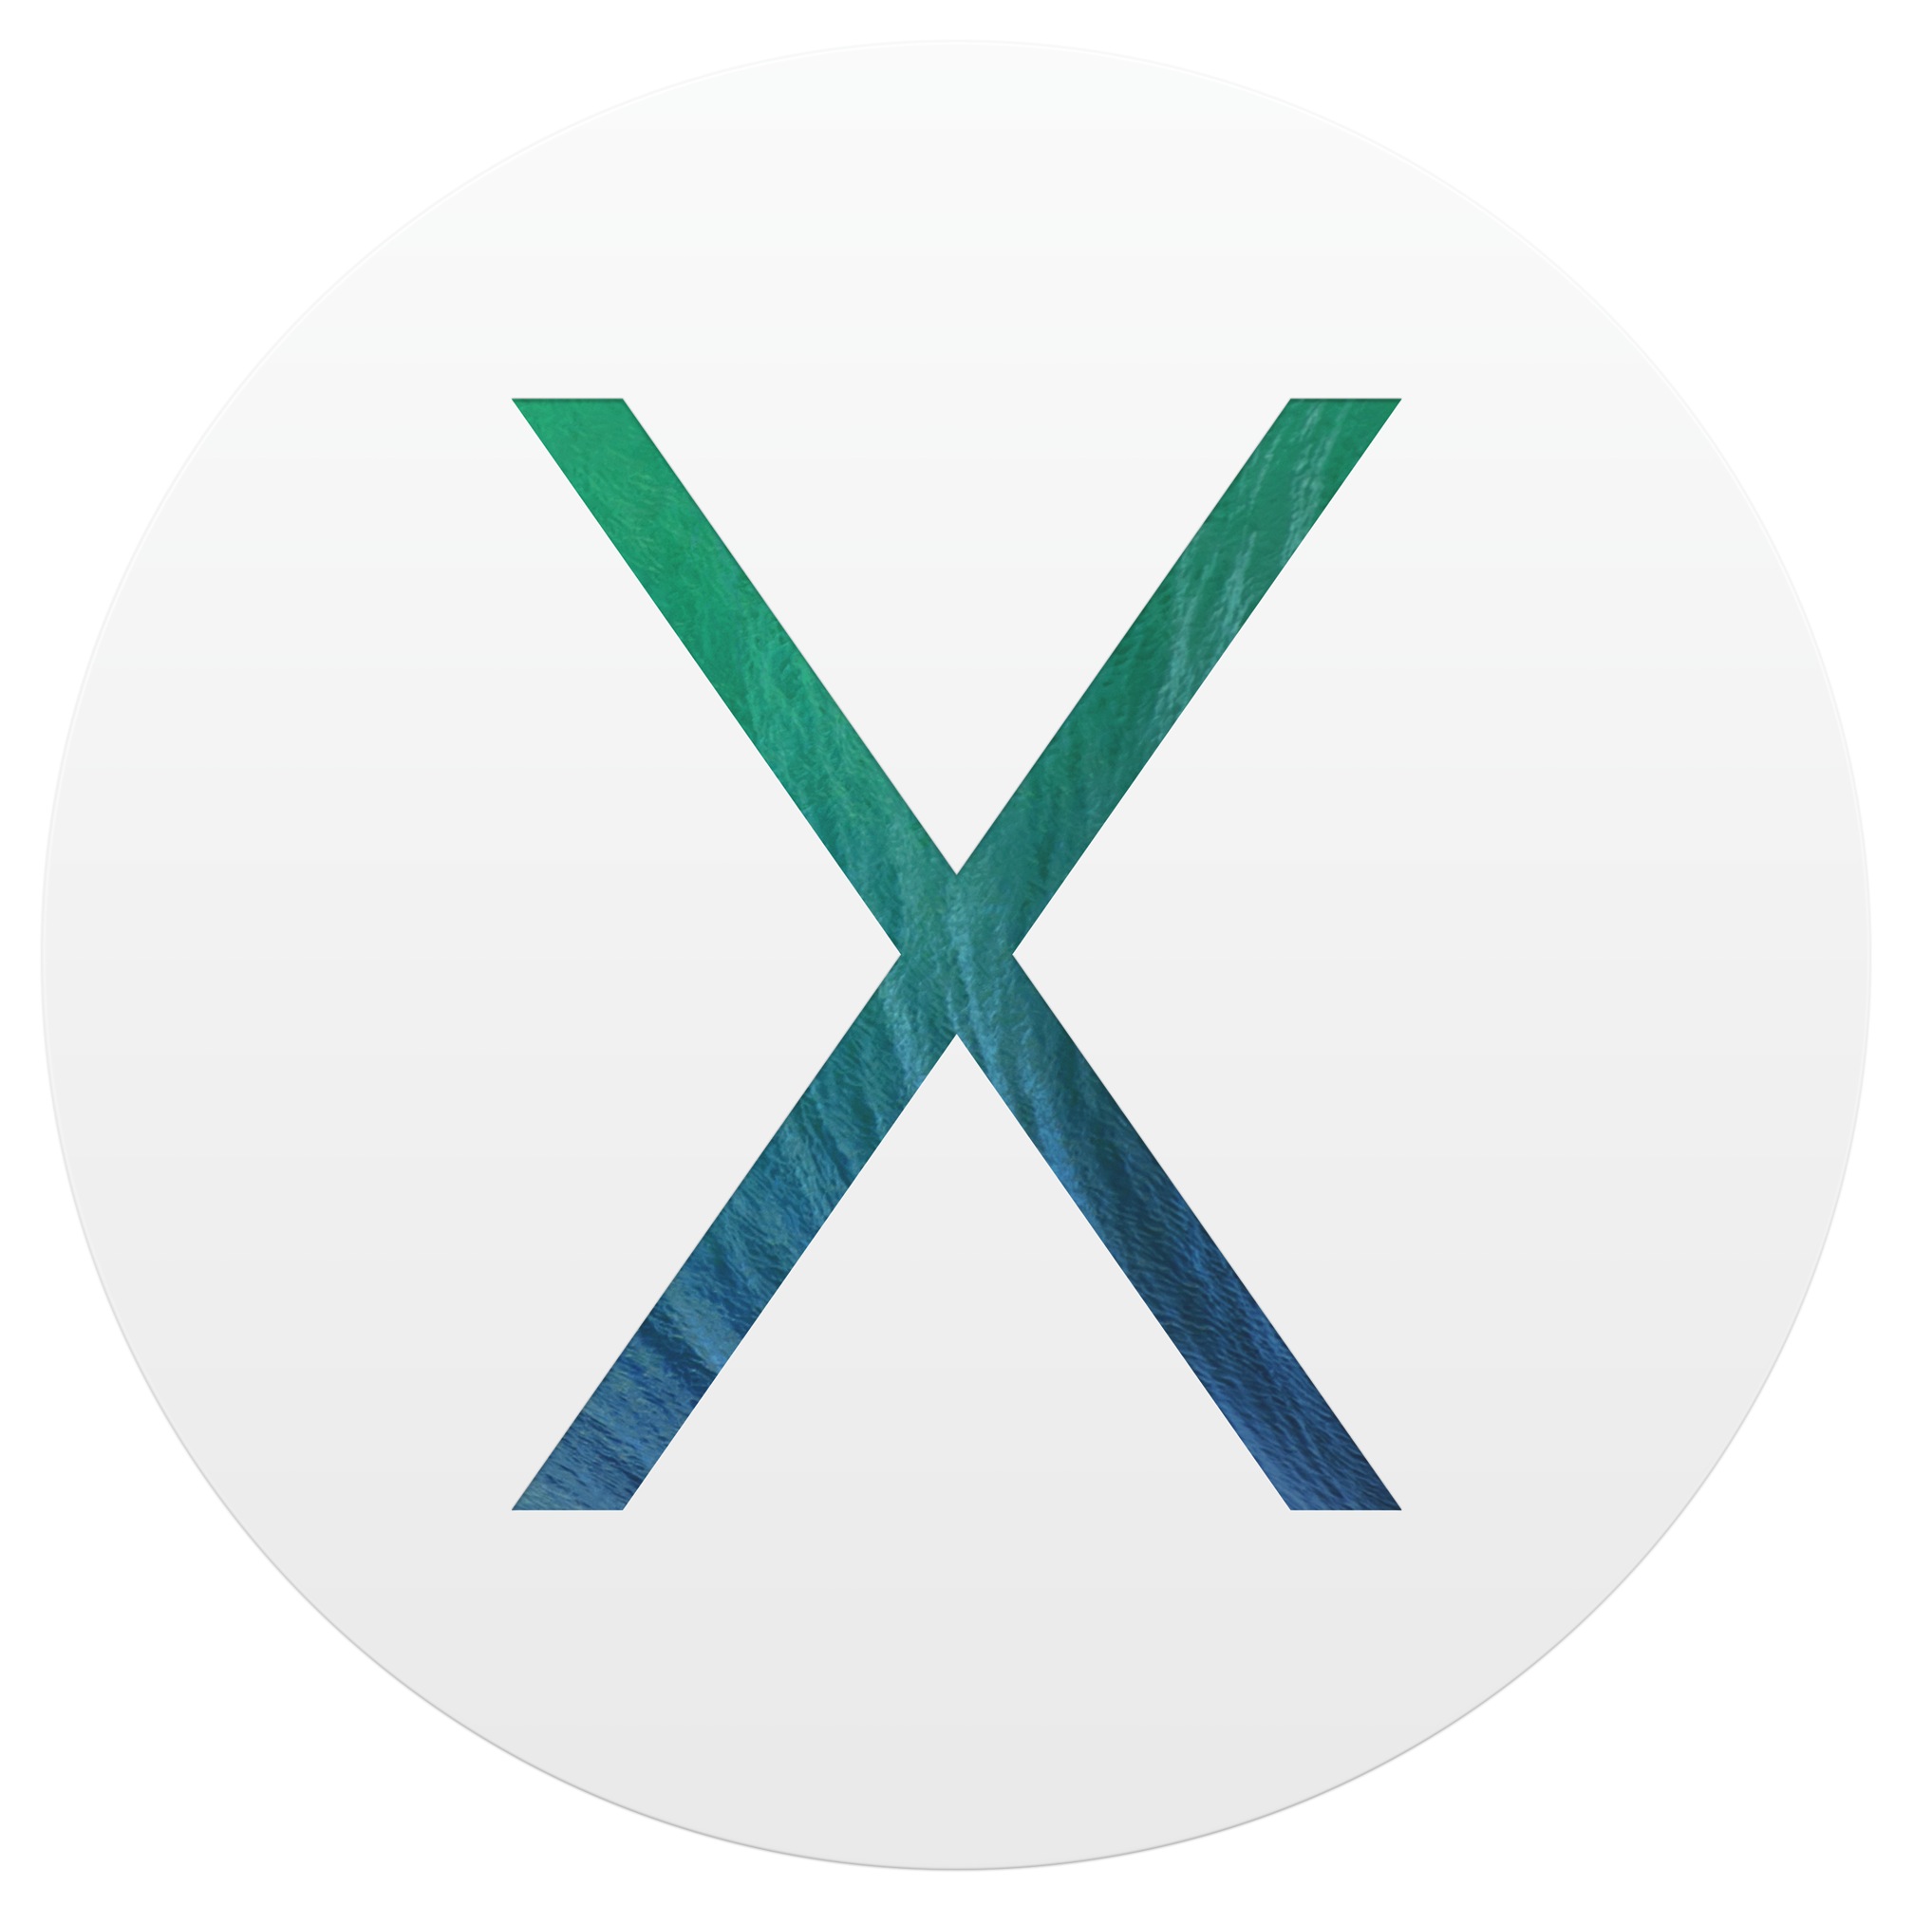 OS X Mavericks (logo, full size)